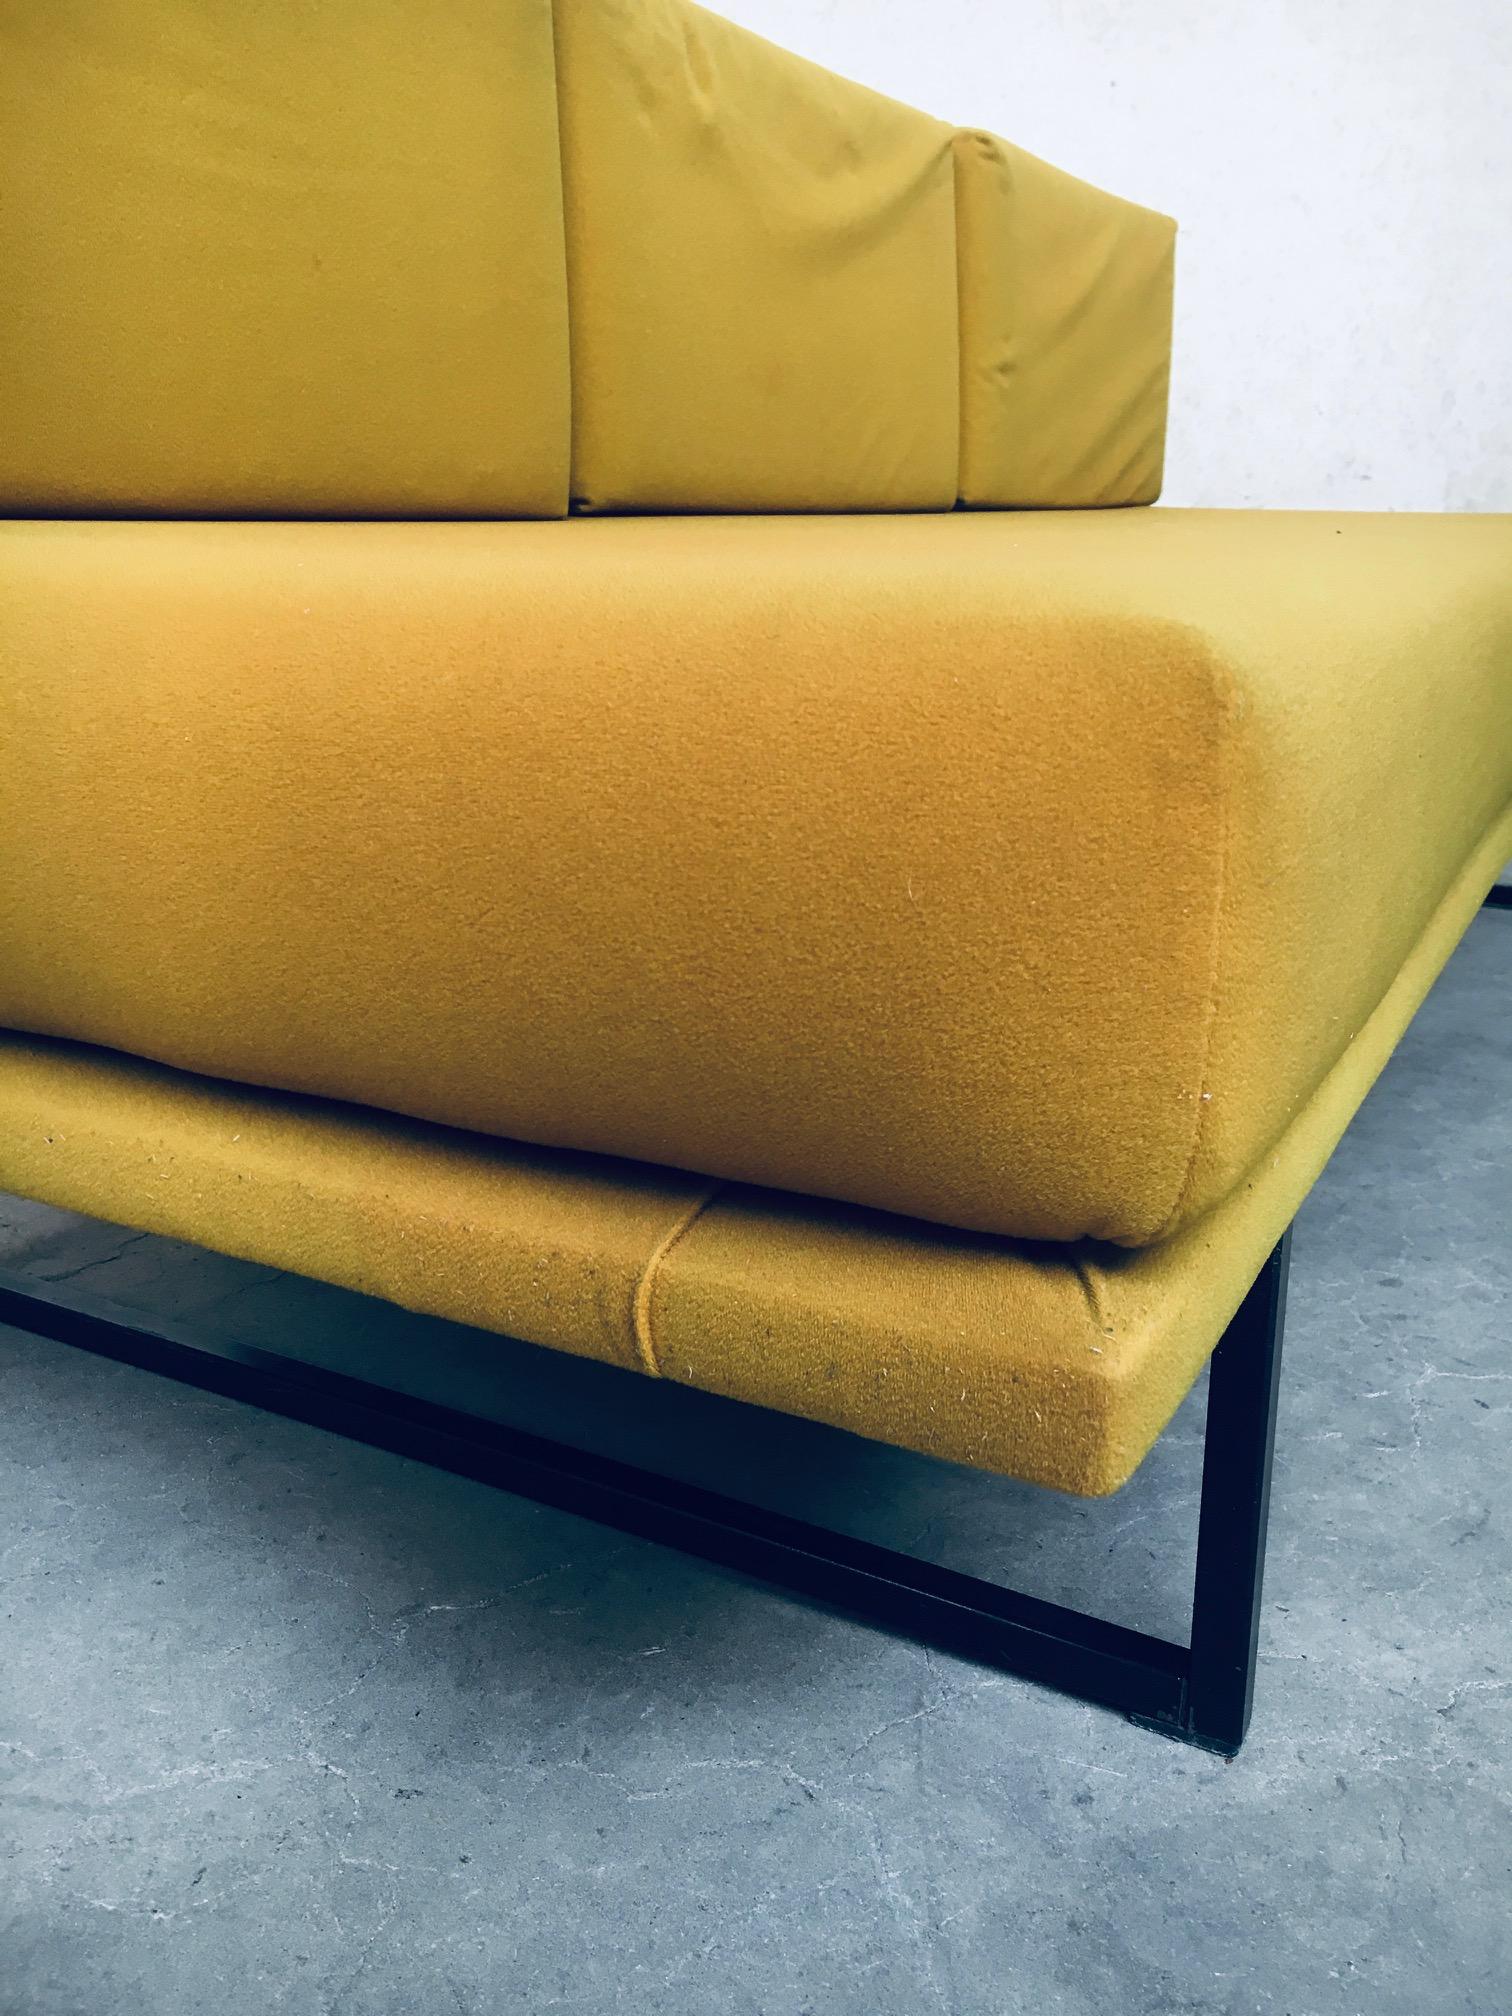 1960's Midcentury Modern Dutch Design 3 Seat Sofa Bench For Sale 7